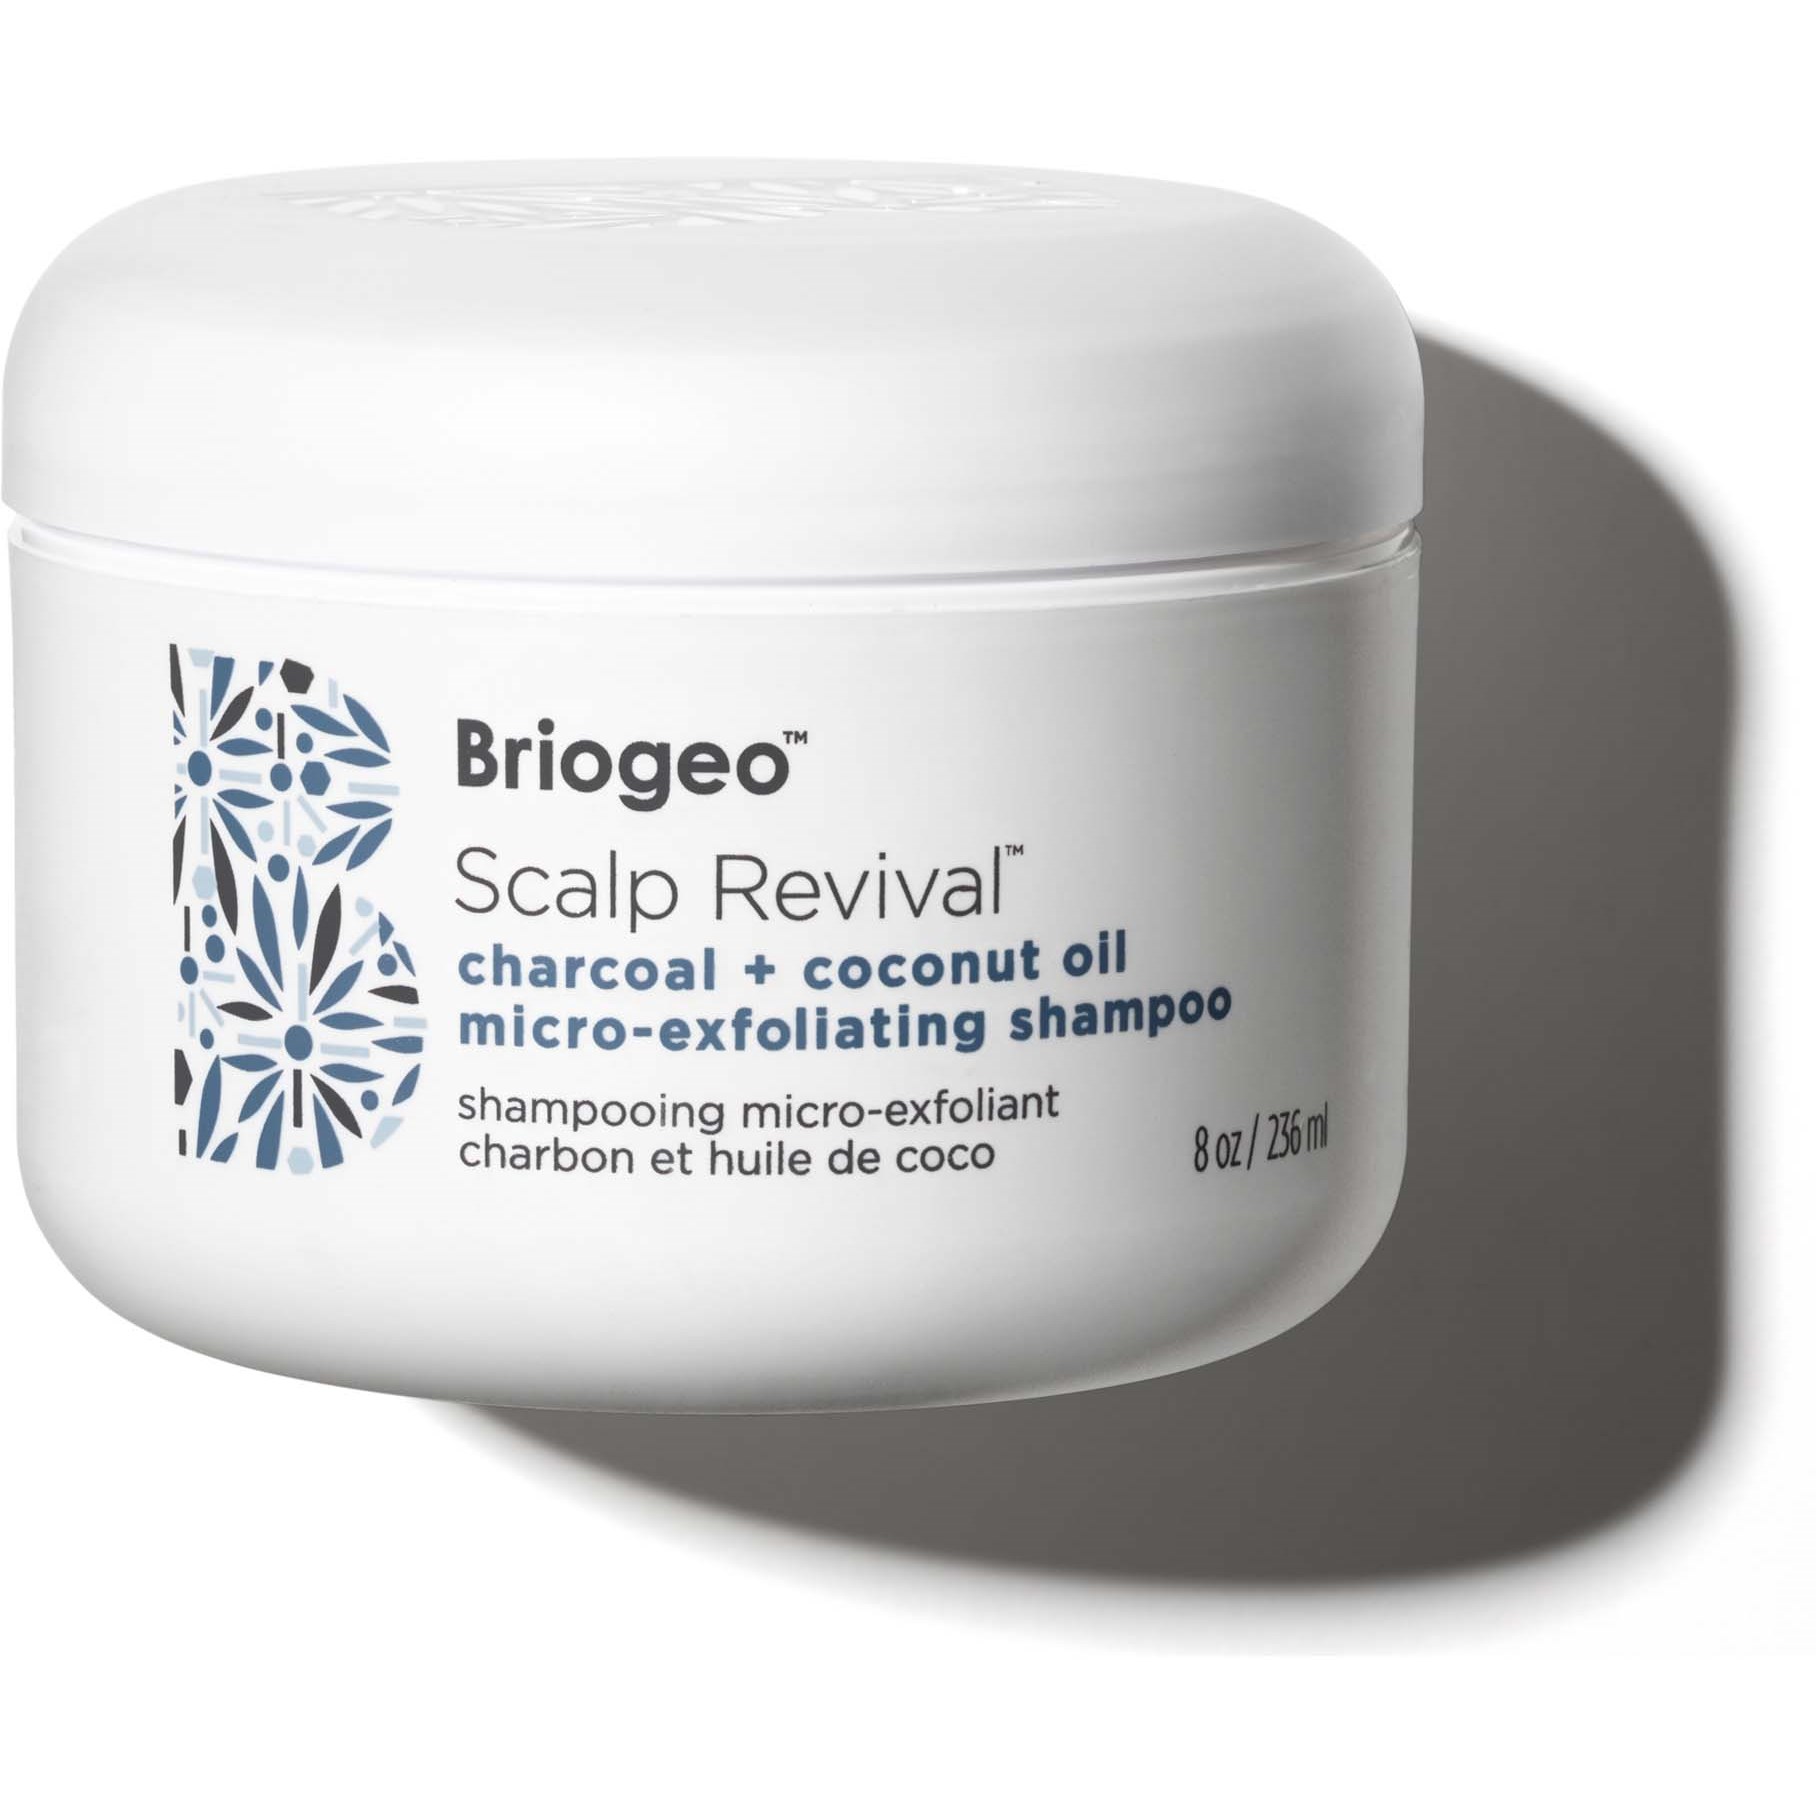 Läs mer om Briogeo Scalp Revival™ Charcoal + Coconut Oil Micro-exfoliating Shampo